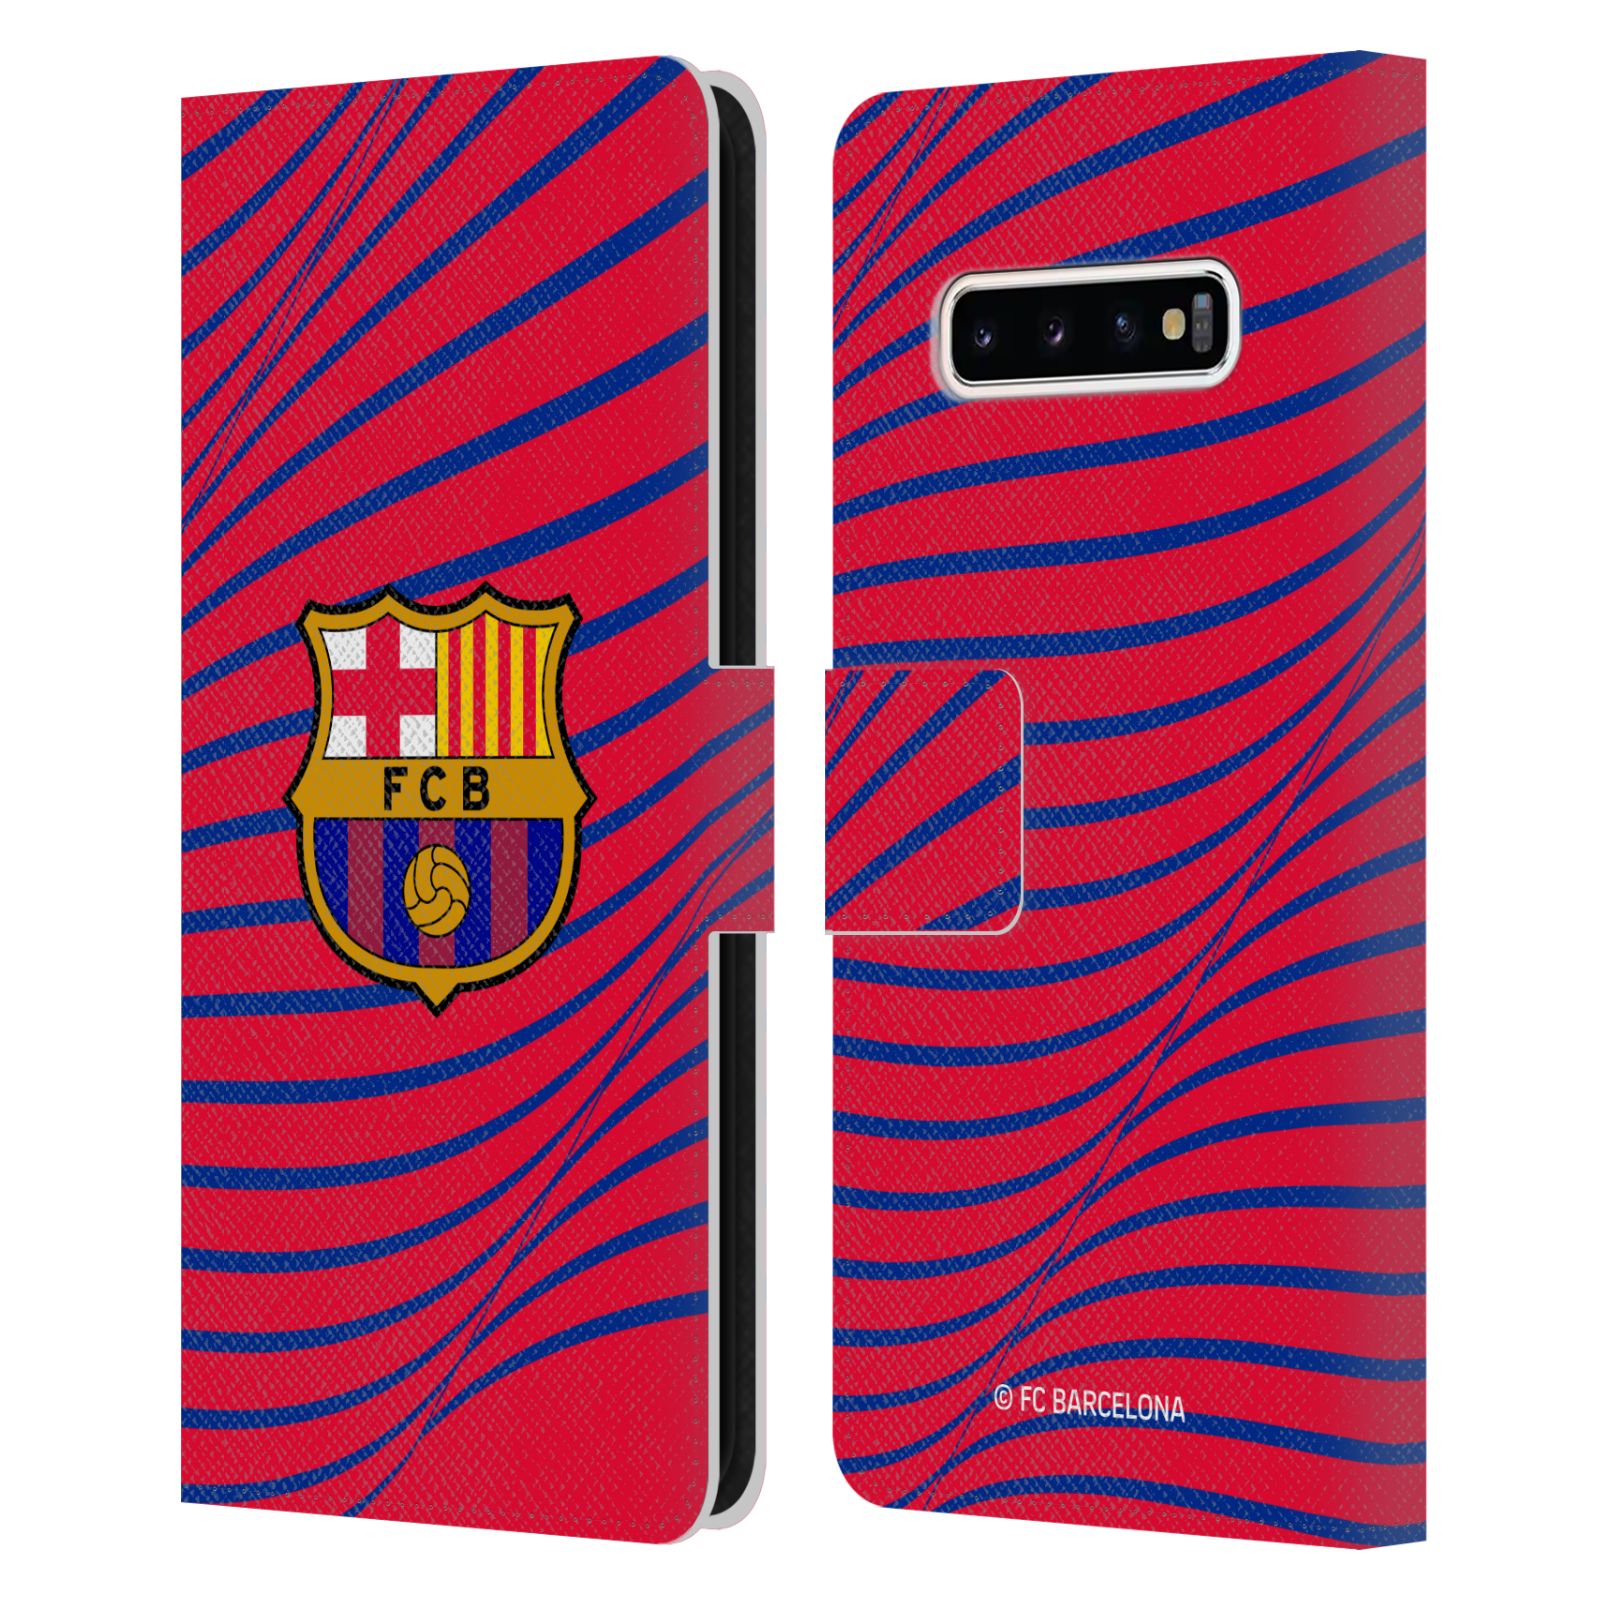 Pouzdro na mobil Samsung Galaxy S10+ - HEAD CASE - FC Barcelona - Grafická textura logo